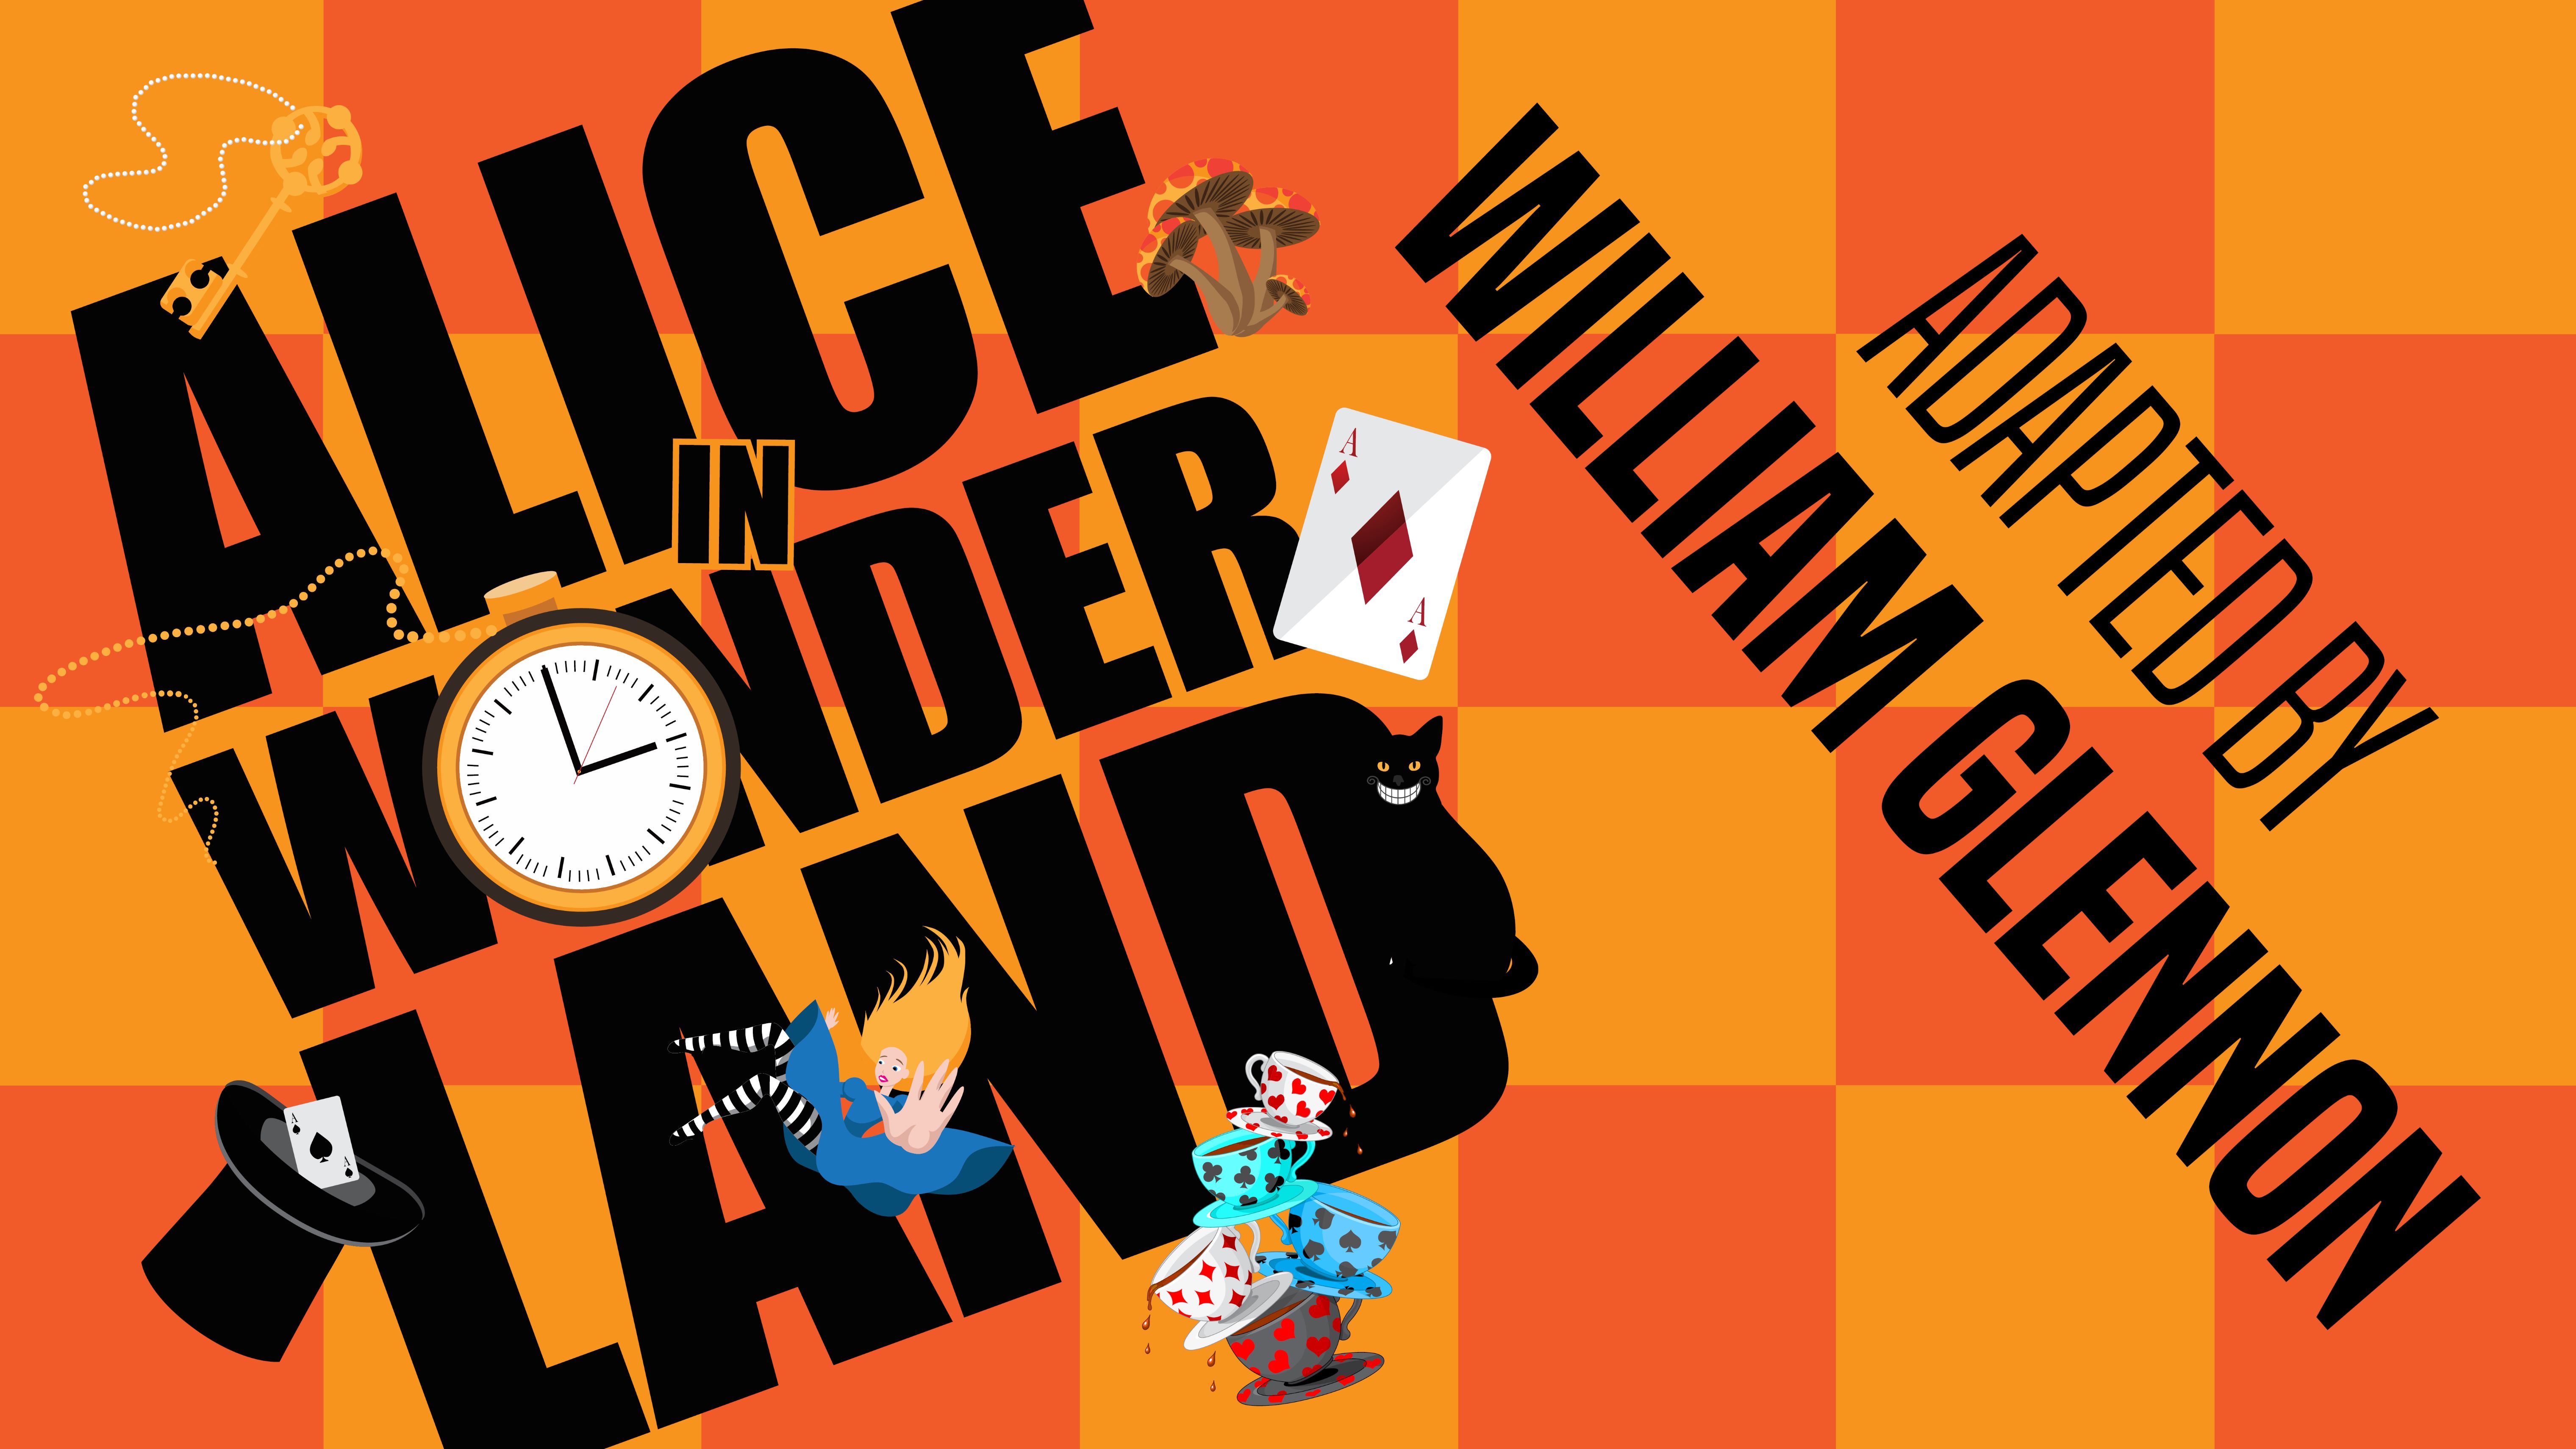 Alice in Wonderland adapted by Willliam Glennon